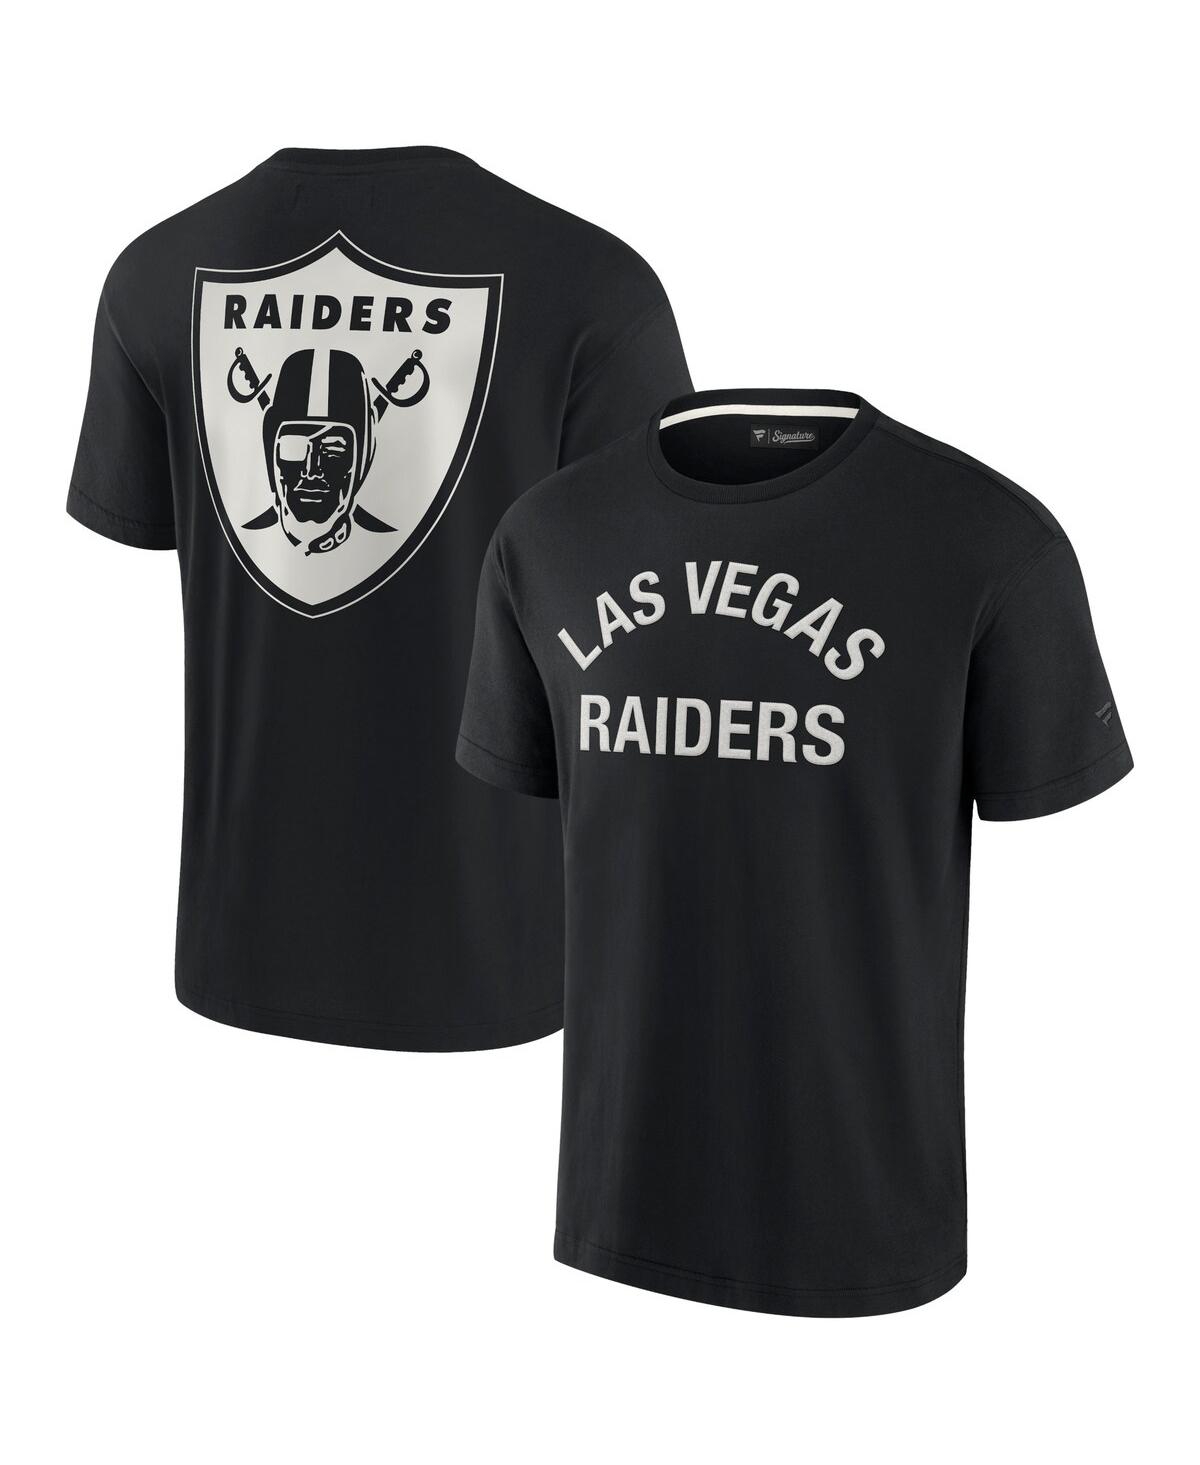 Men's and Women's Fanatics Signature Black Las Vegas Raiders Super Soft Short Sleeve T-shirt - Black